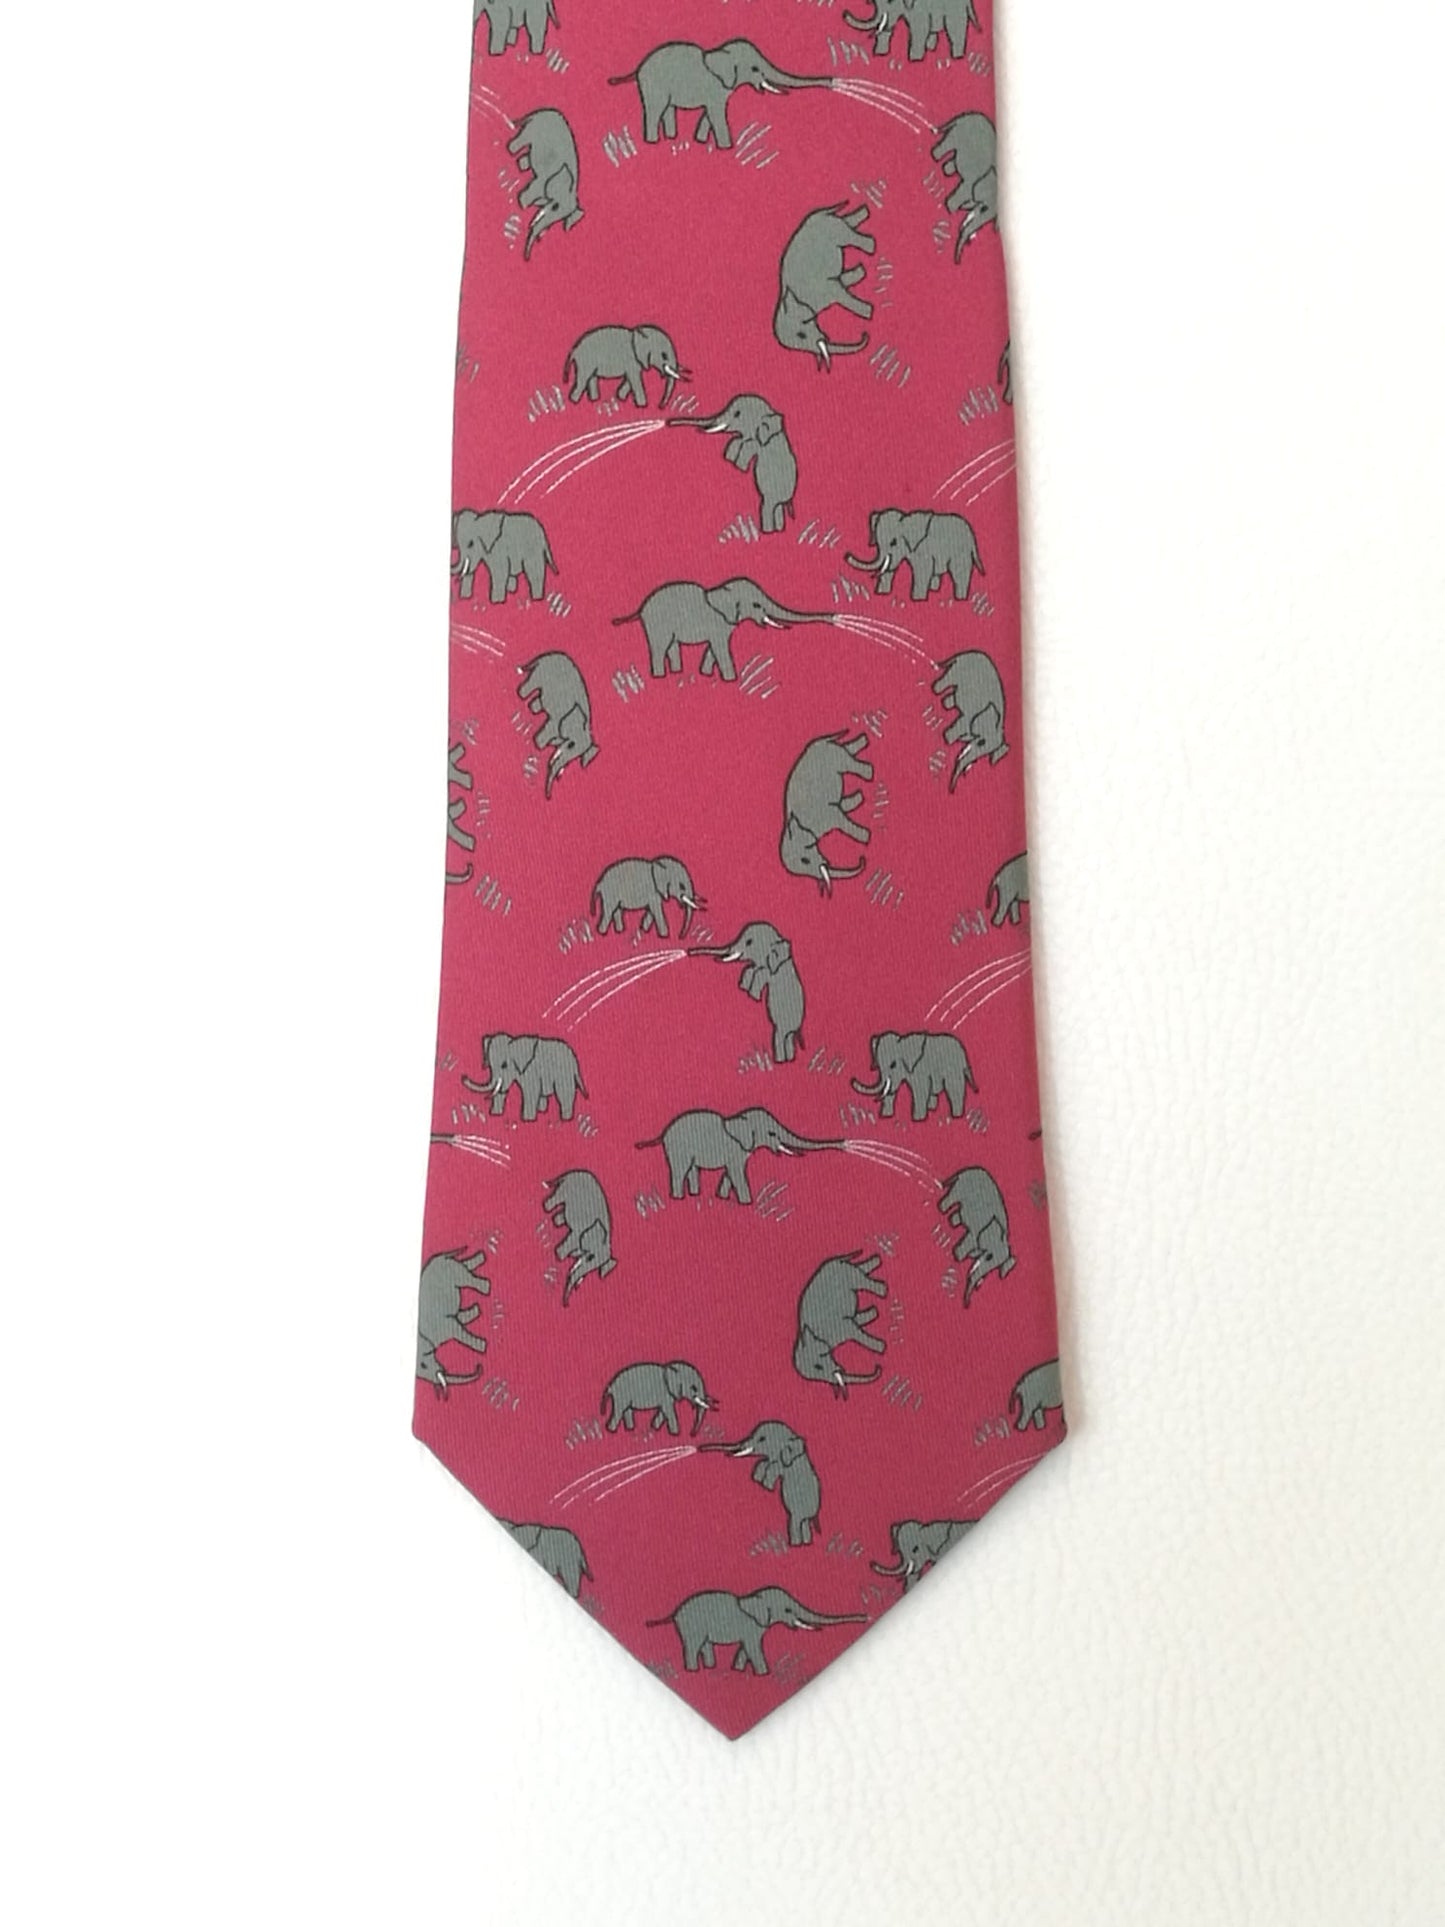 Cravatta Hermès con sfondo rosa con elefanti grigi.